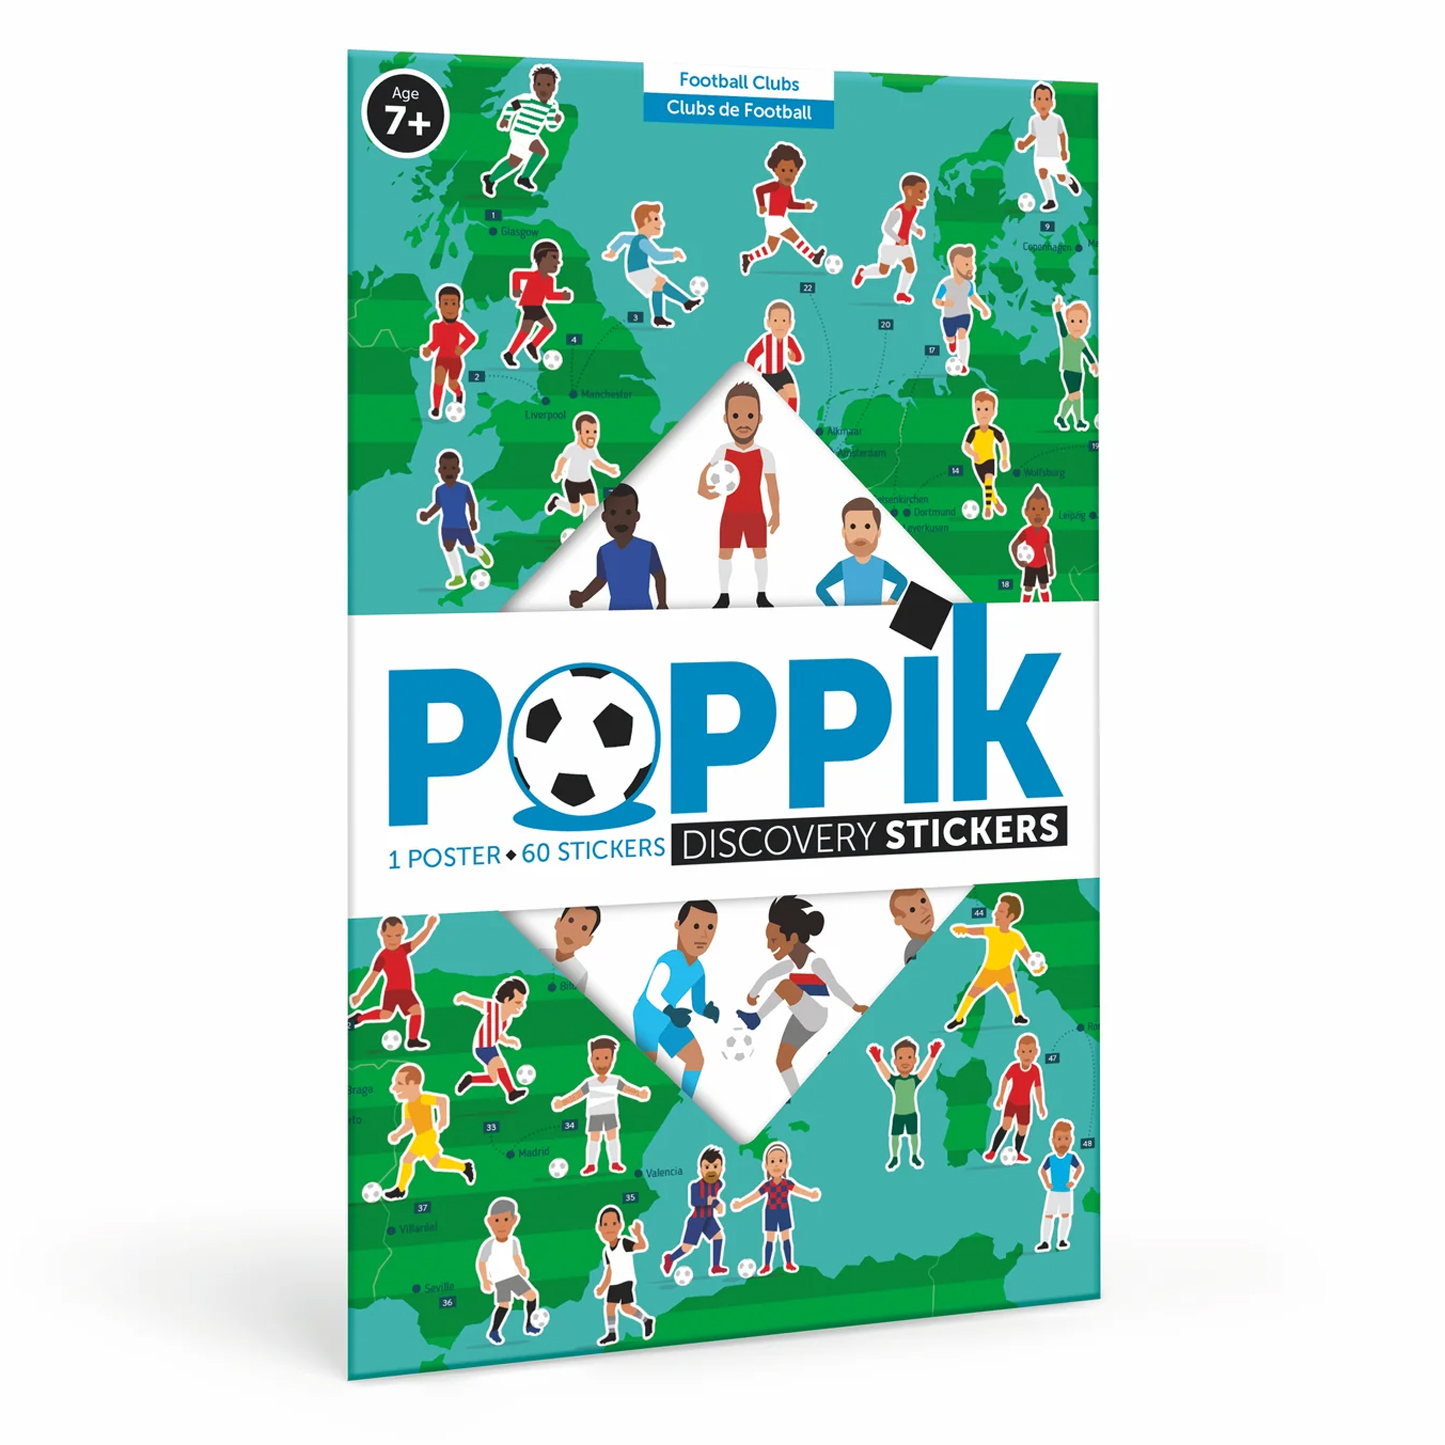 POPPIK Poppik Discovery Sticker Poster - Football Clubs